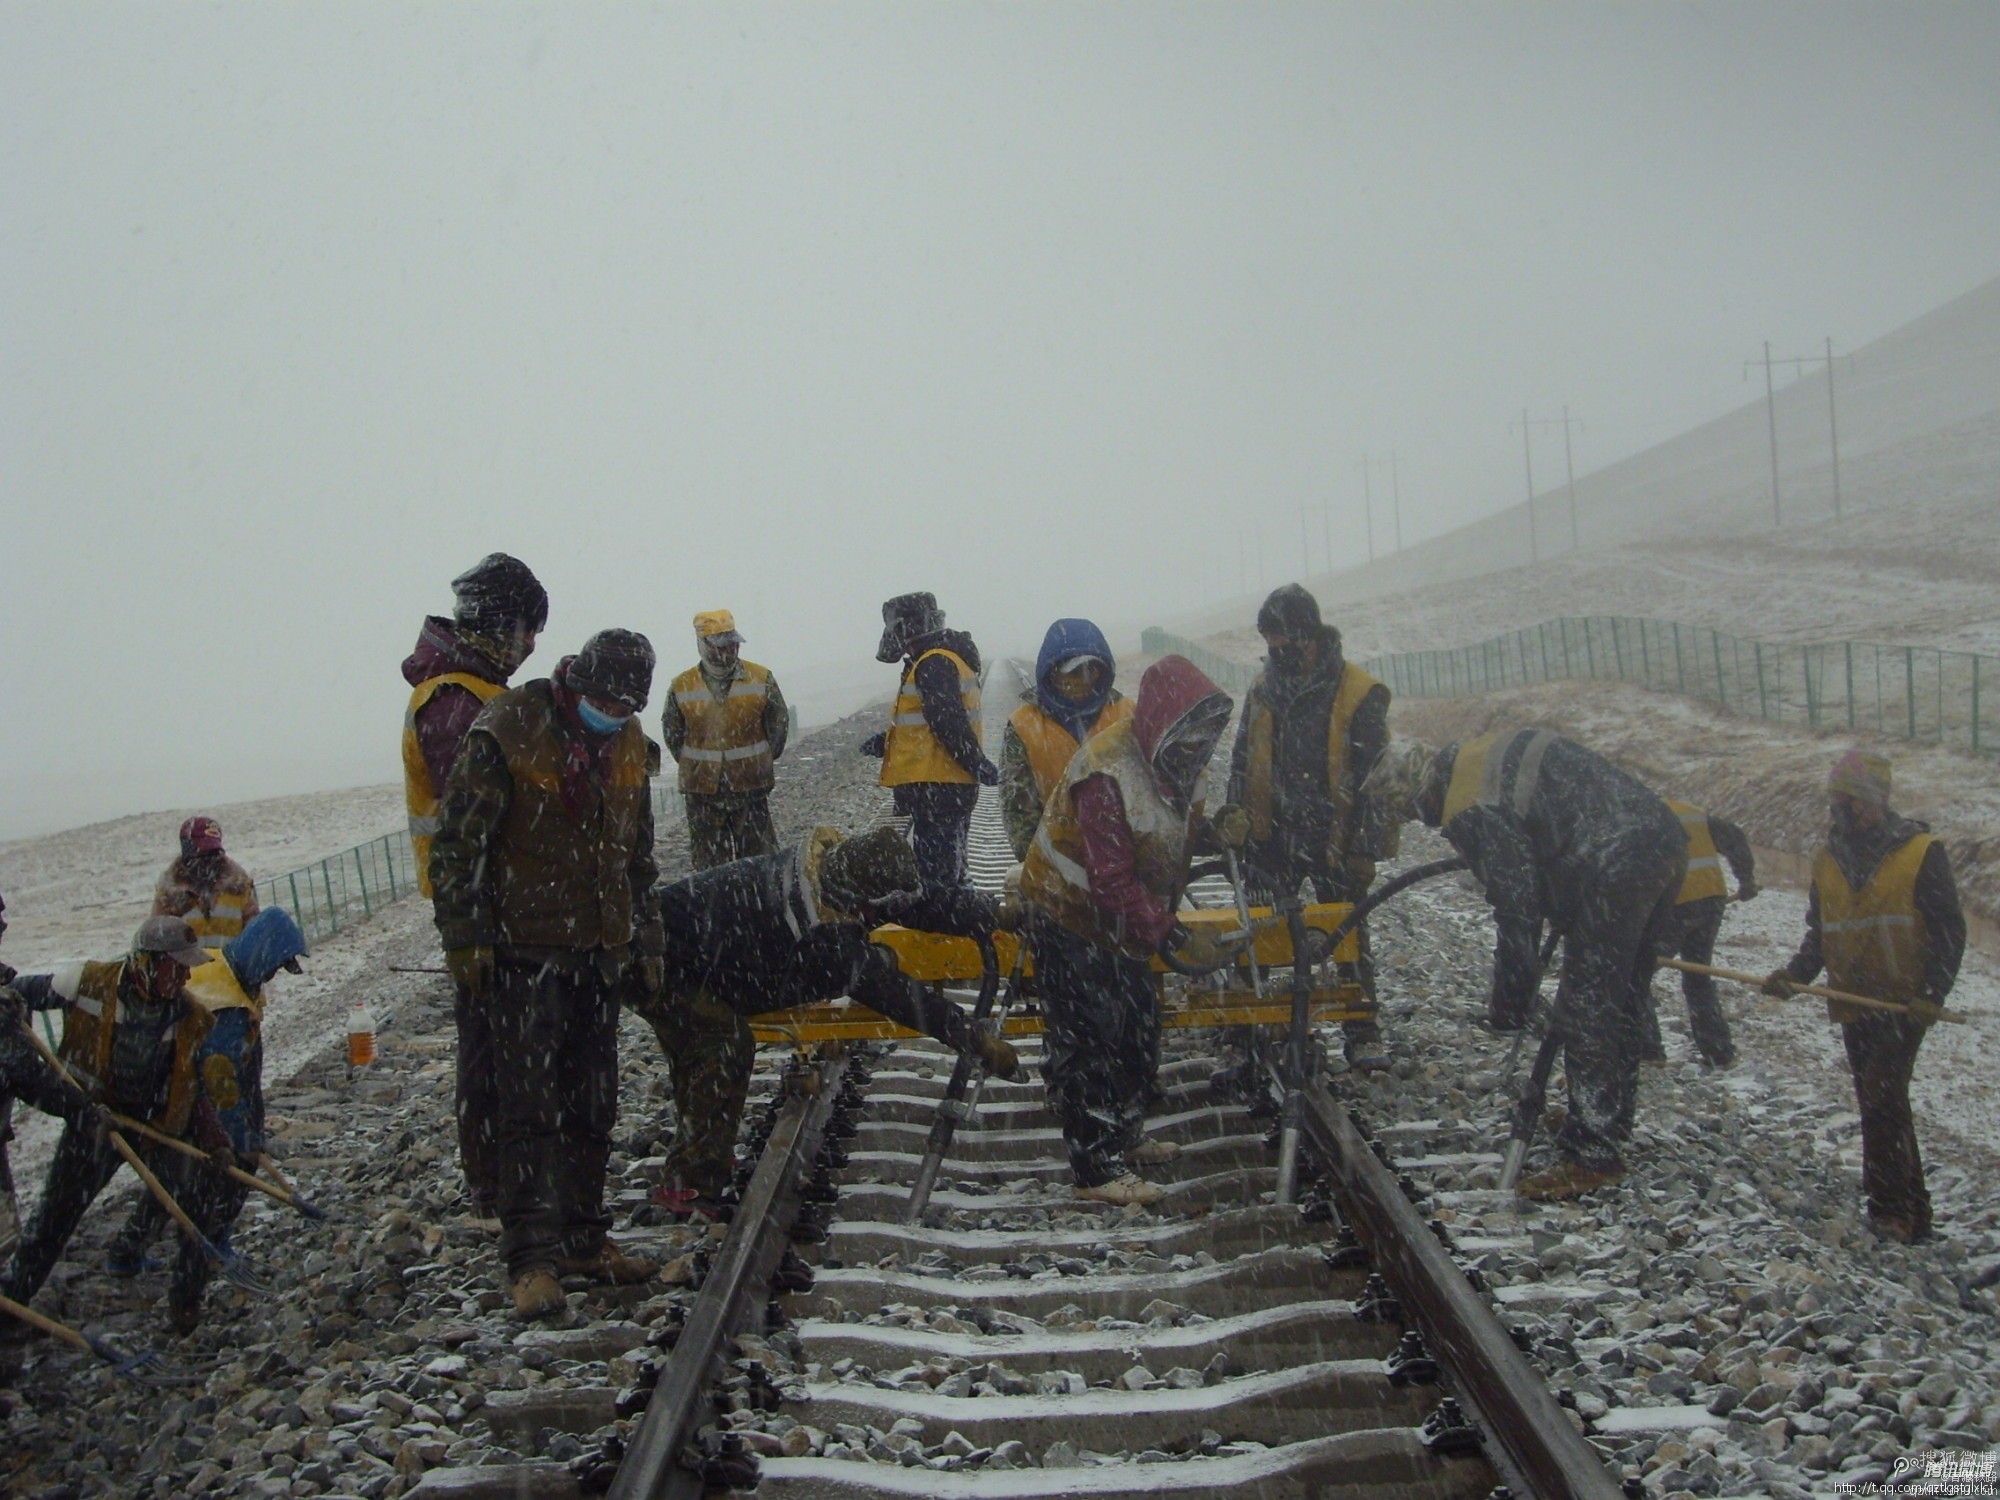 lhasa-nyingchi-railway-starts-construction-in-2014.jpg